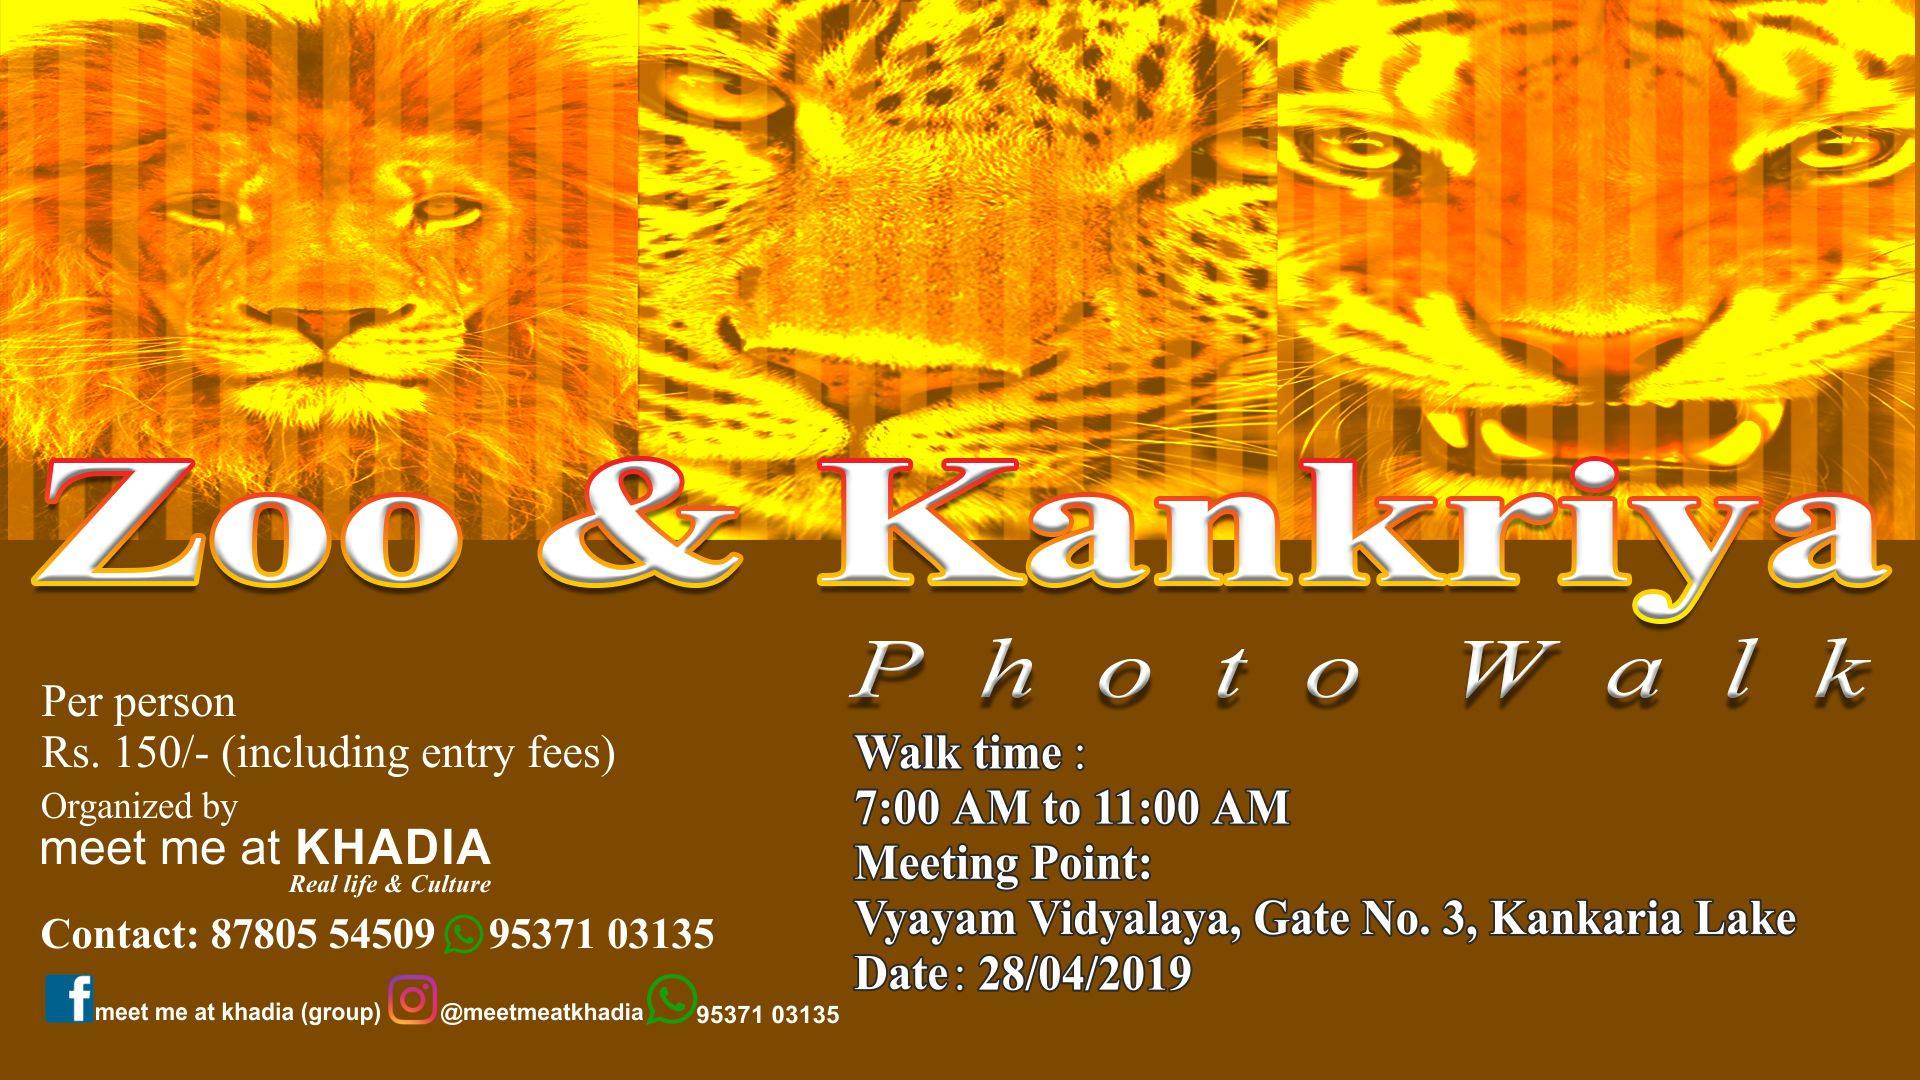 Zoo & Kankaria (Photo Walk) - Events in Ahmedabad